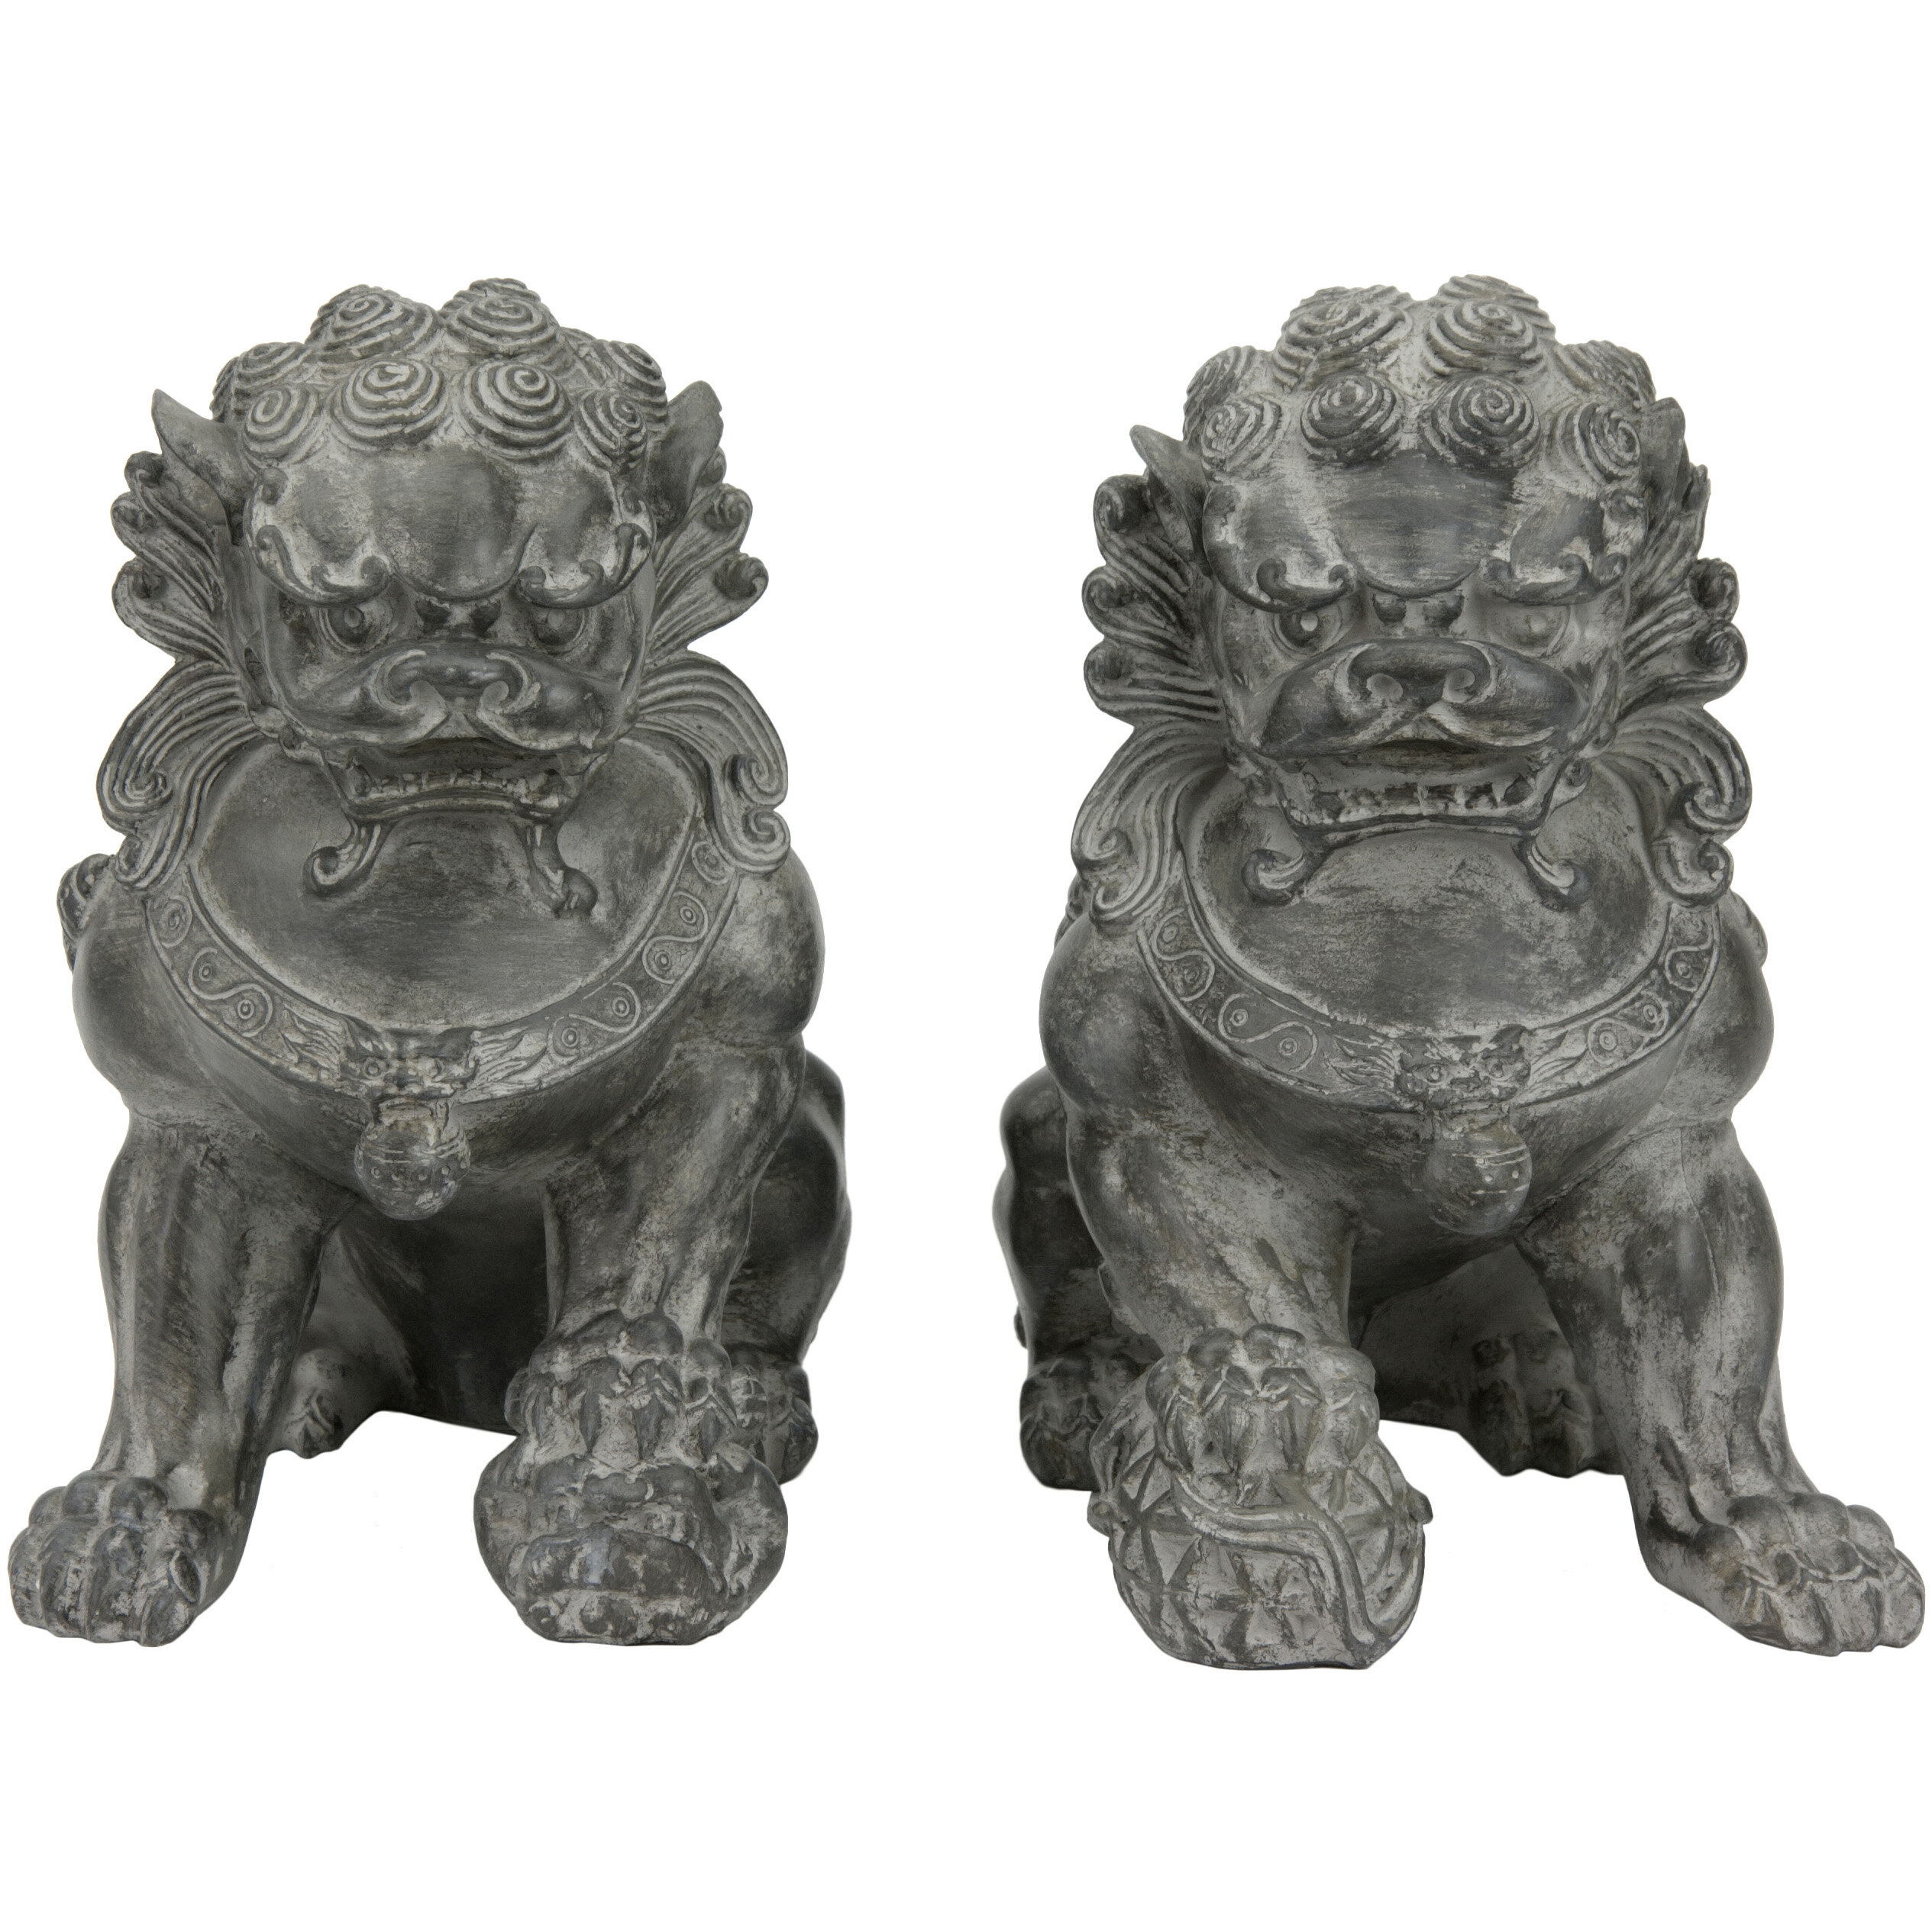 Chinese Lion Foo Dog Statue - Design Toscano